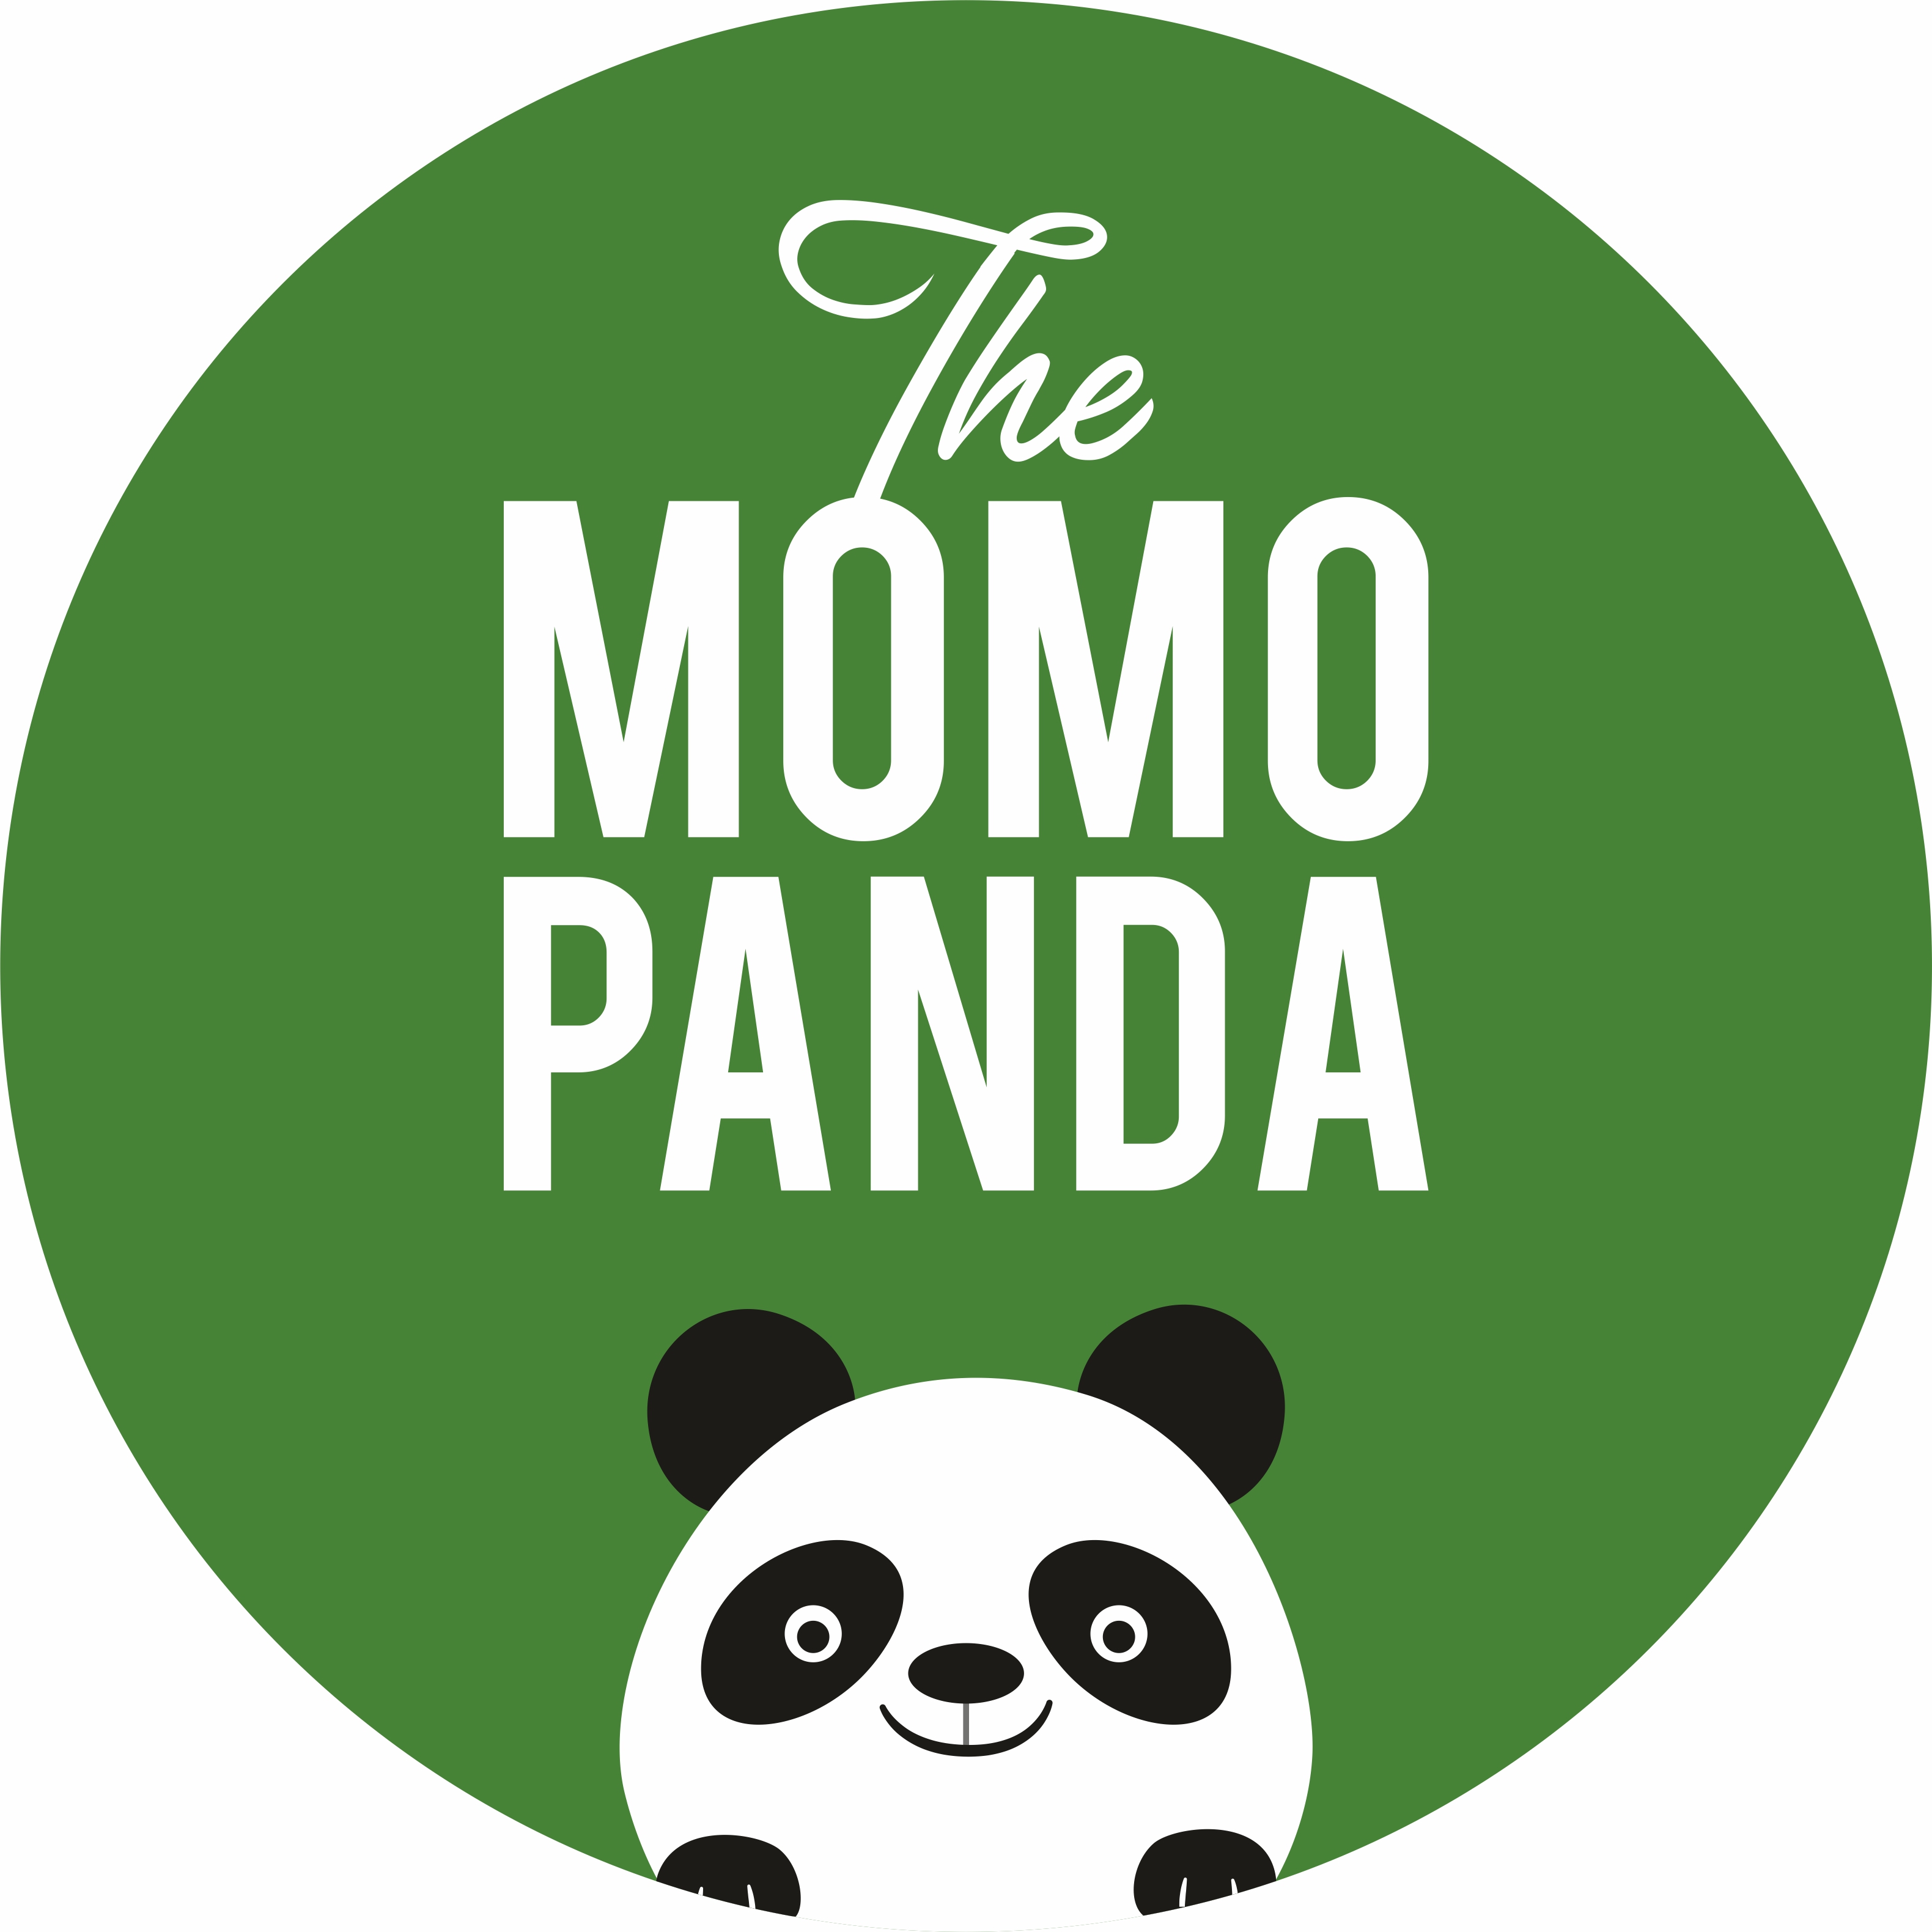 The Momo Panda